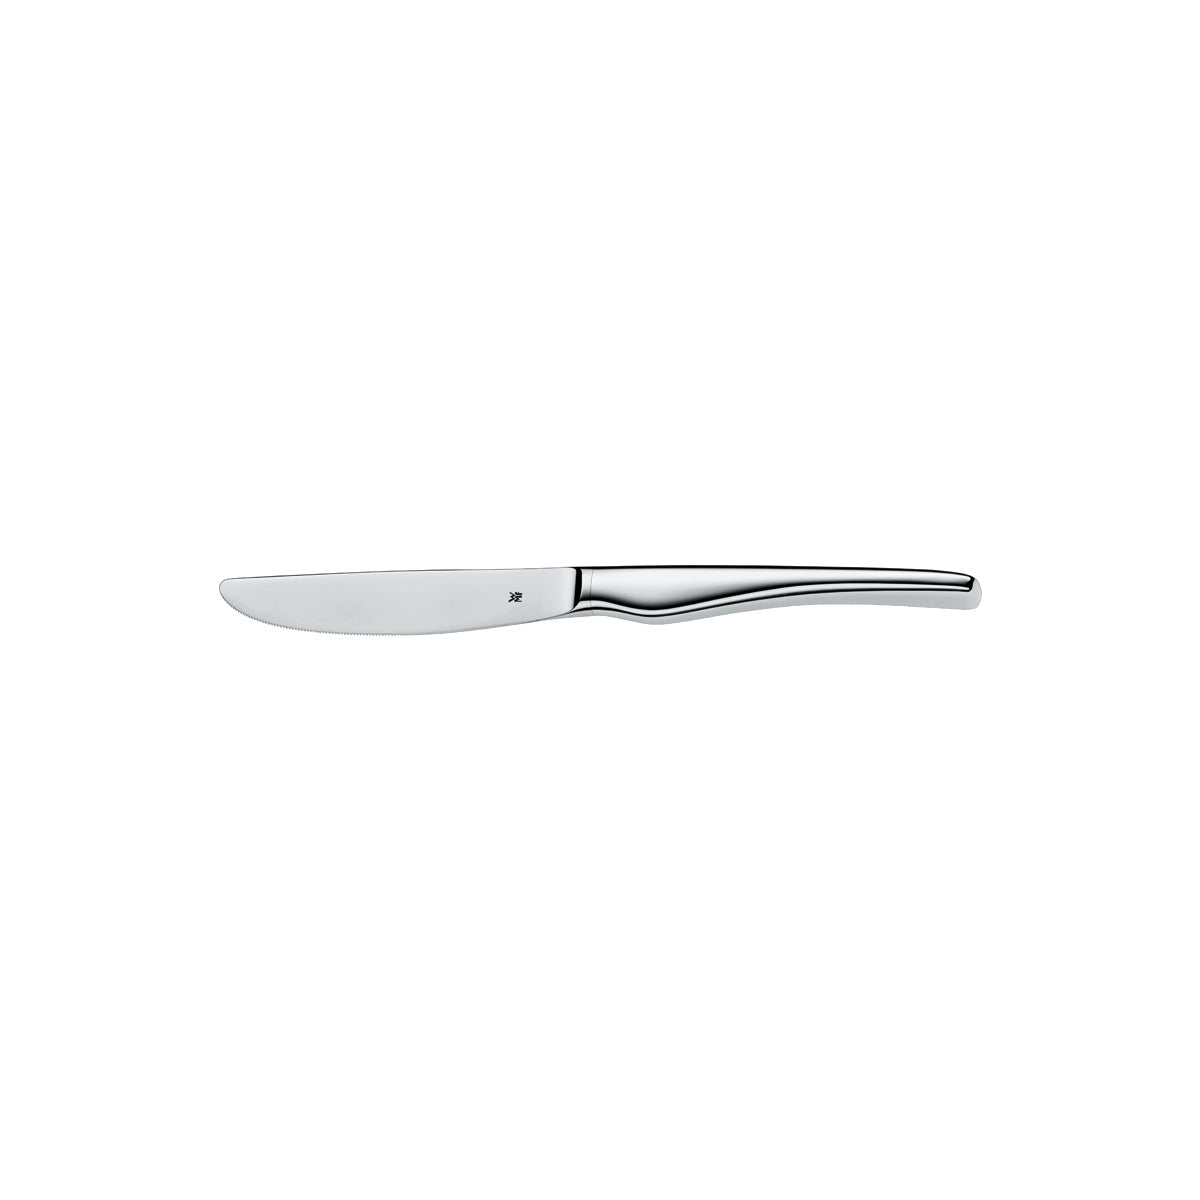 54.1603.6037 WMF Epos Table Knife - Hollow Handle Silverplated Tomkin Australia Hospitality Supplies